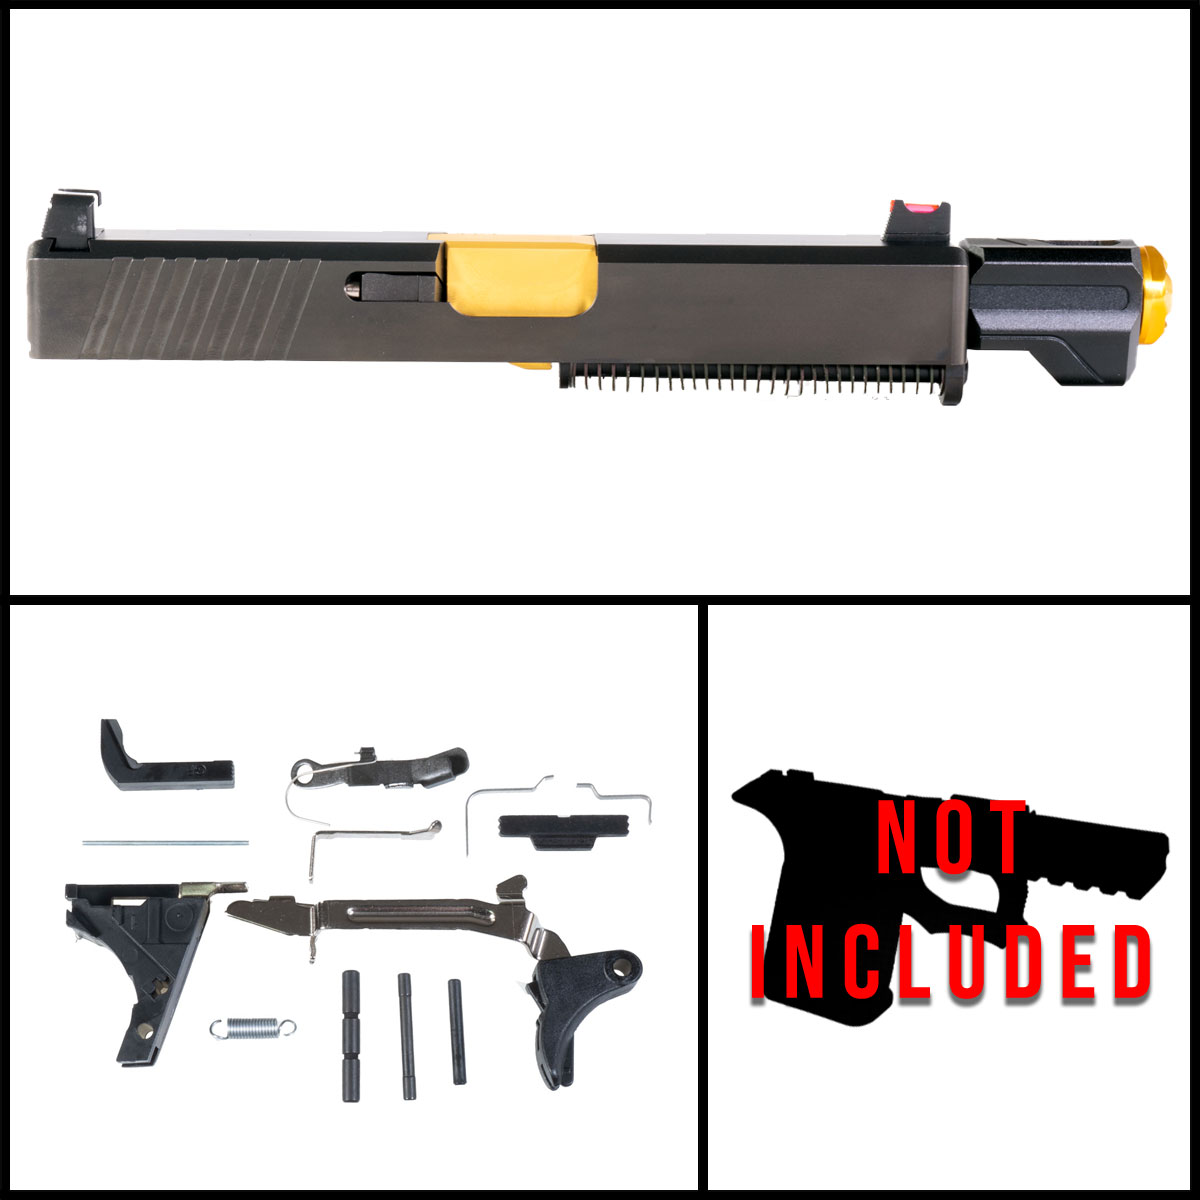 DDS 'Geschoss w/ Tyrant Designs Compensator' 9mm Full Pistol Build Kit (Everything Minus Frame) - Glock 19 Gen 1-3 Compatible